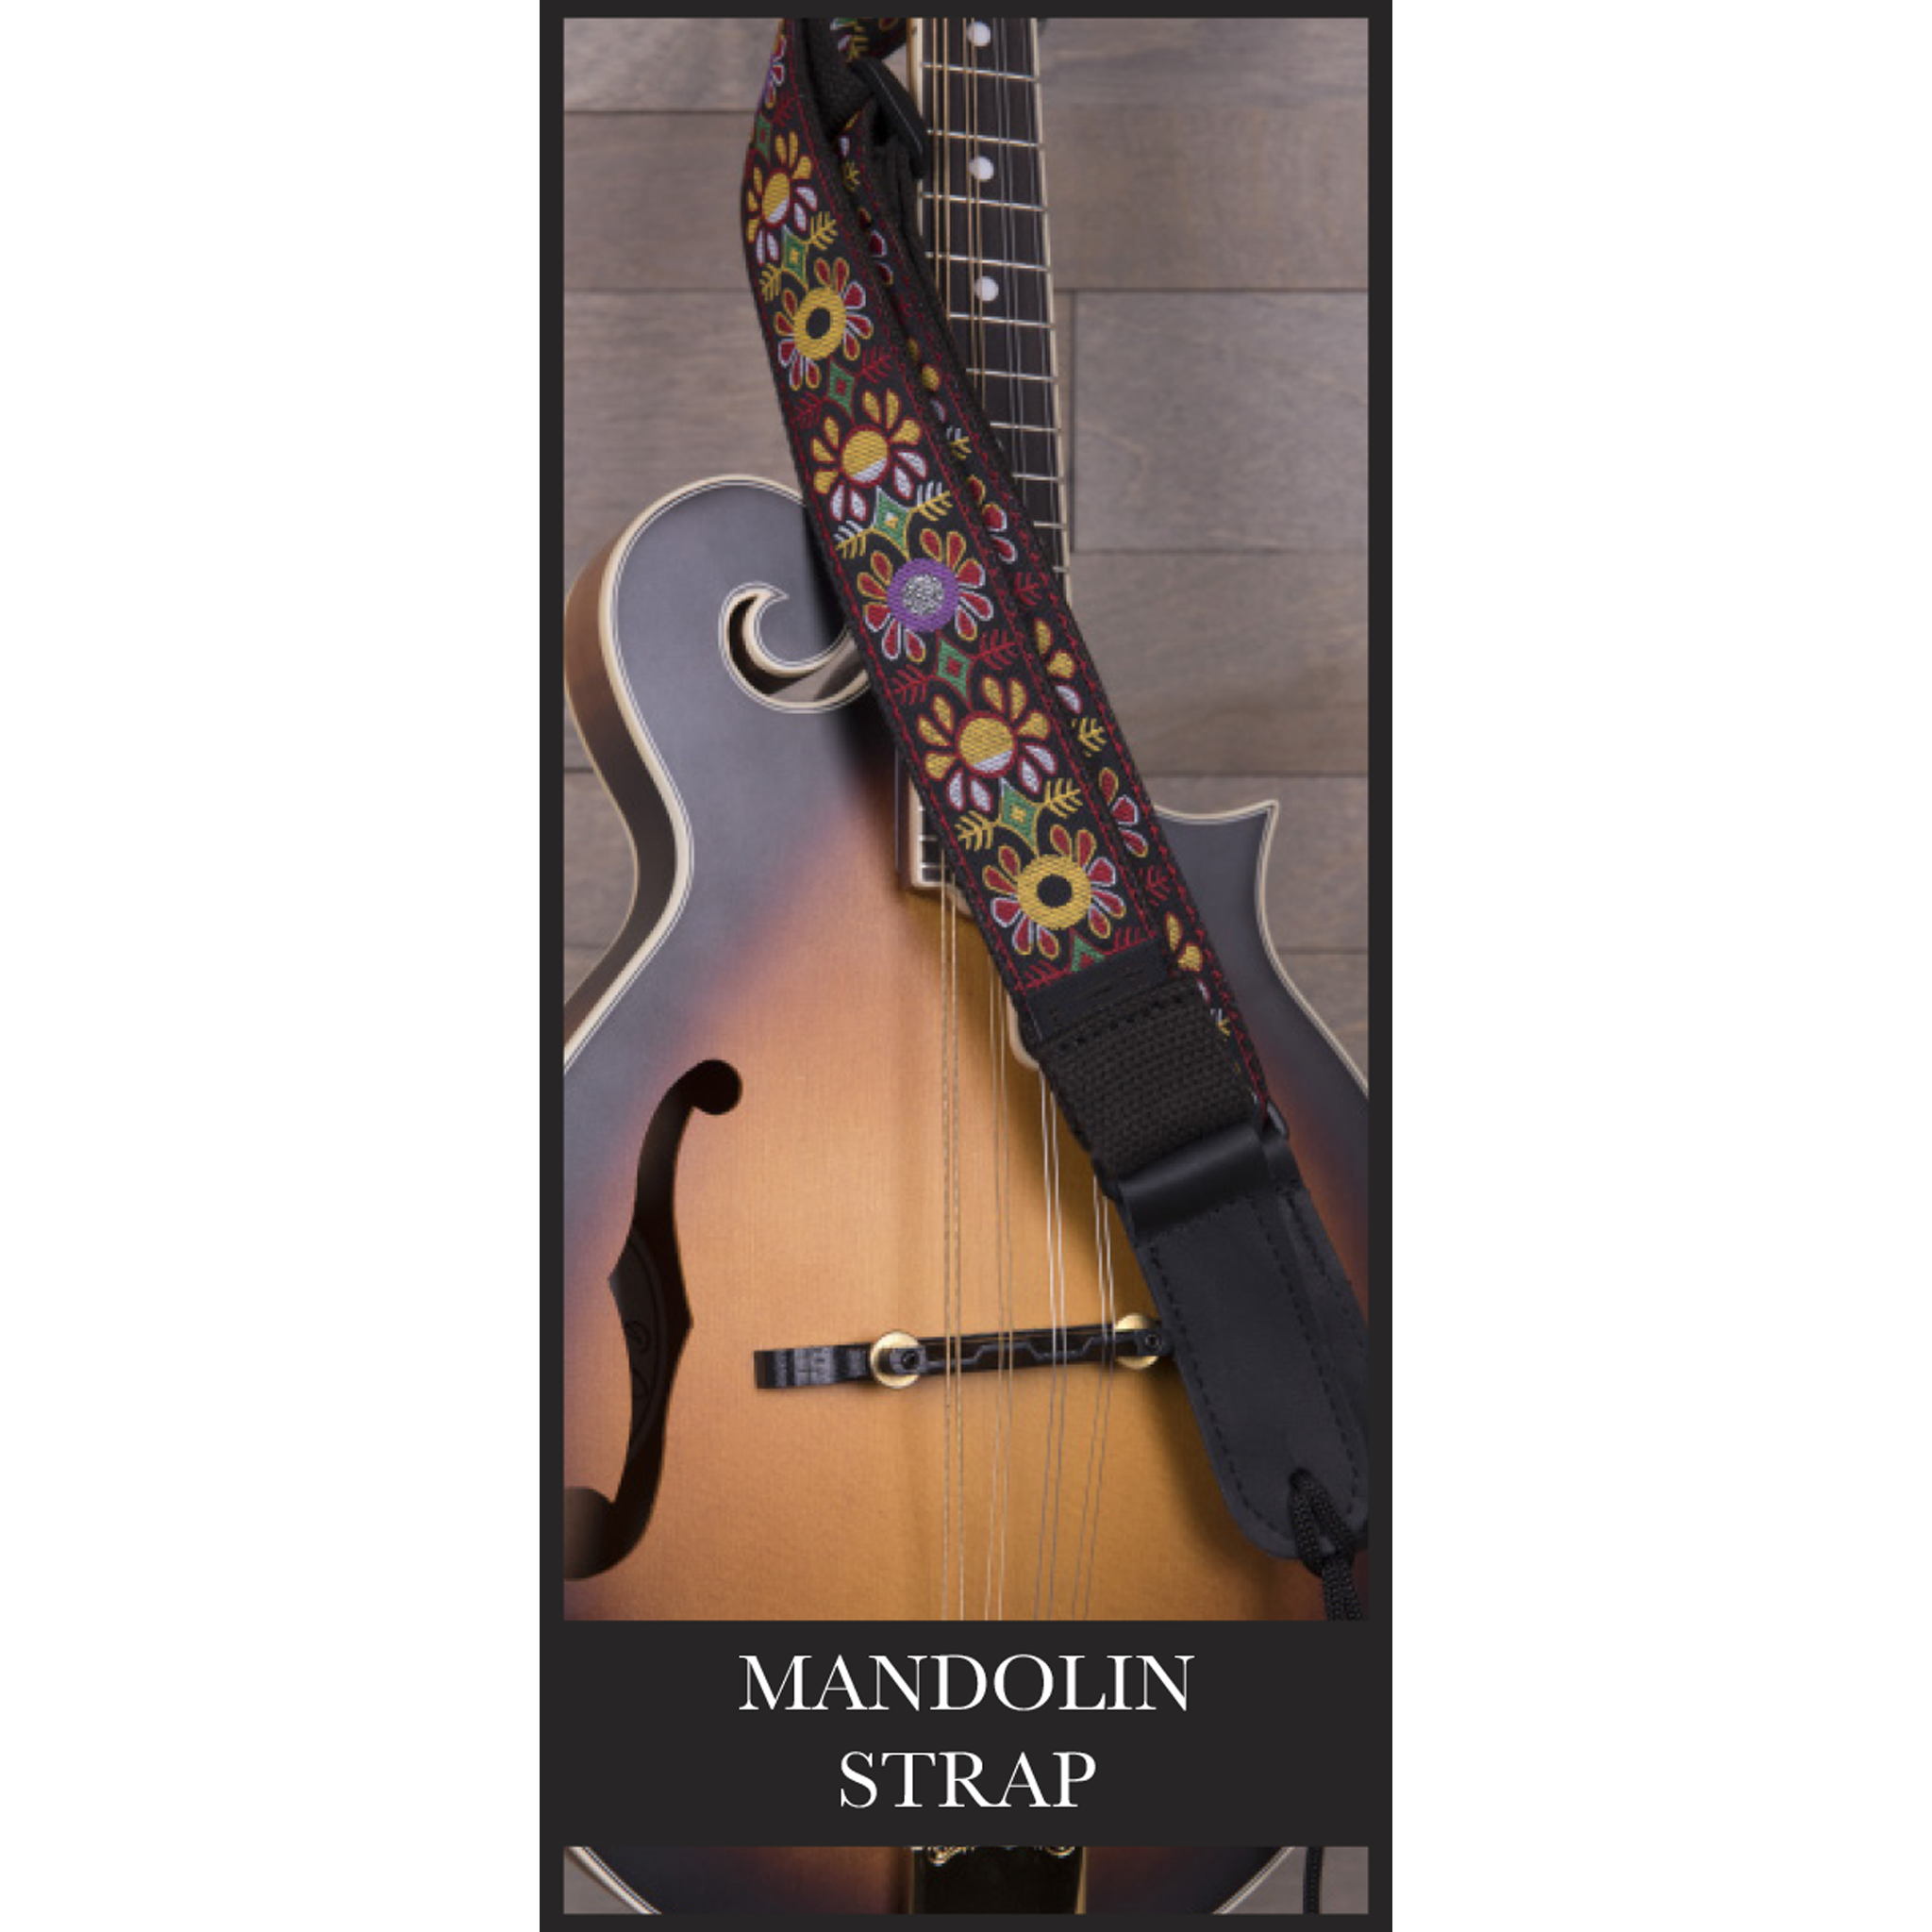 My Fave Mandolin Strap on a Mandolin.